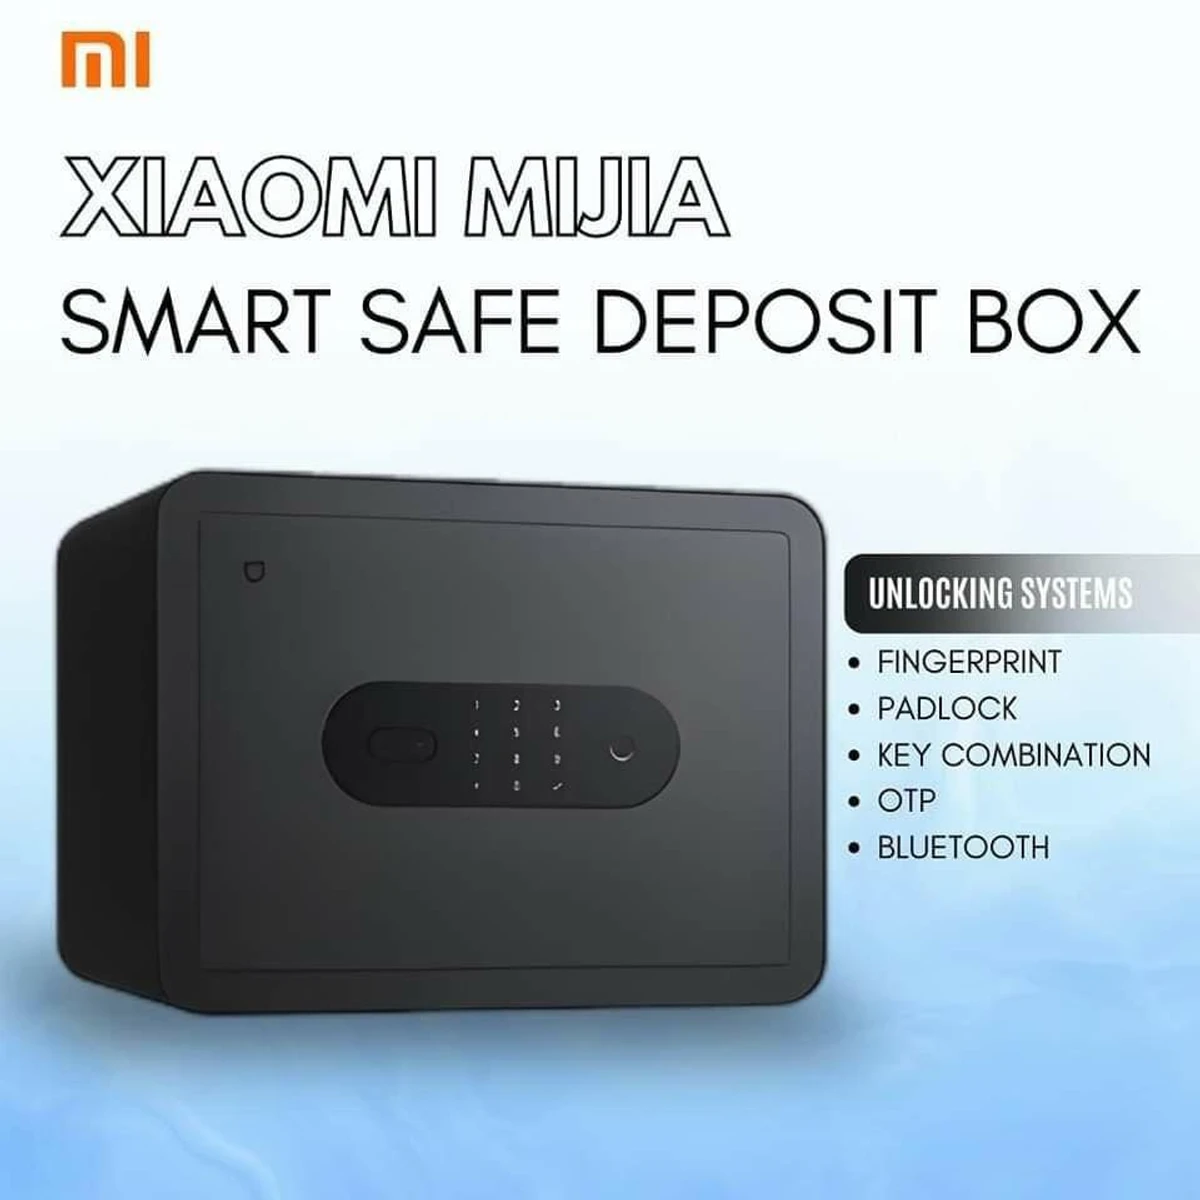 Smart Safe Deposit Box